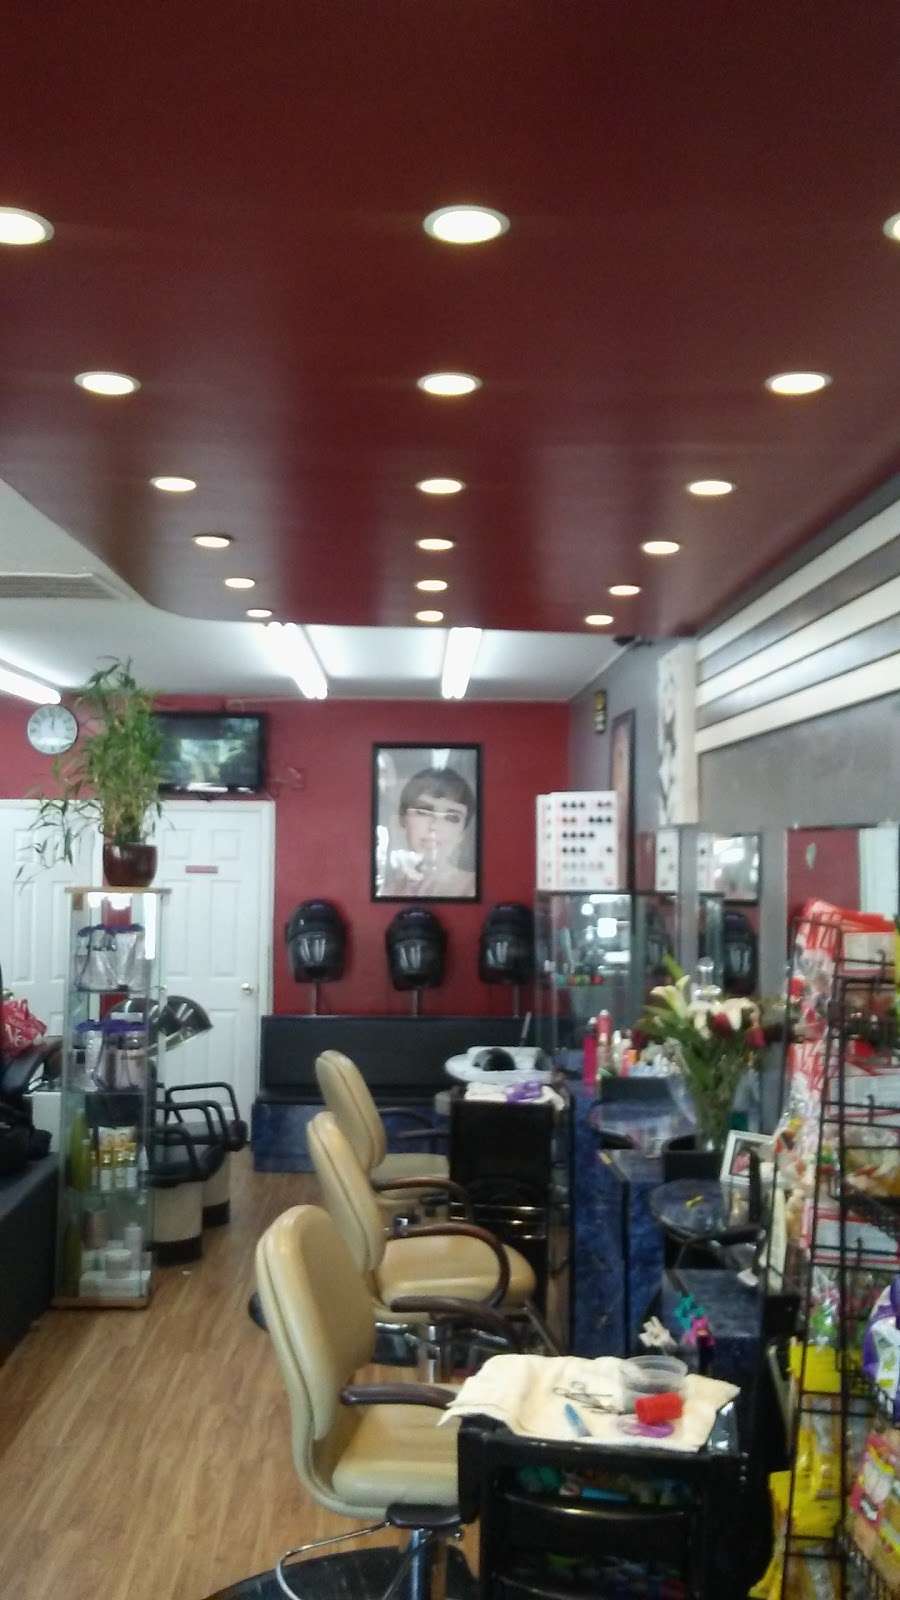 Prestige Beauty Salon | 48 Throop Ave, New Brunswick, NJ 08901, USA | Phone: (732) 543-0441